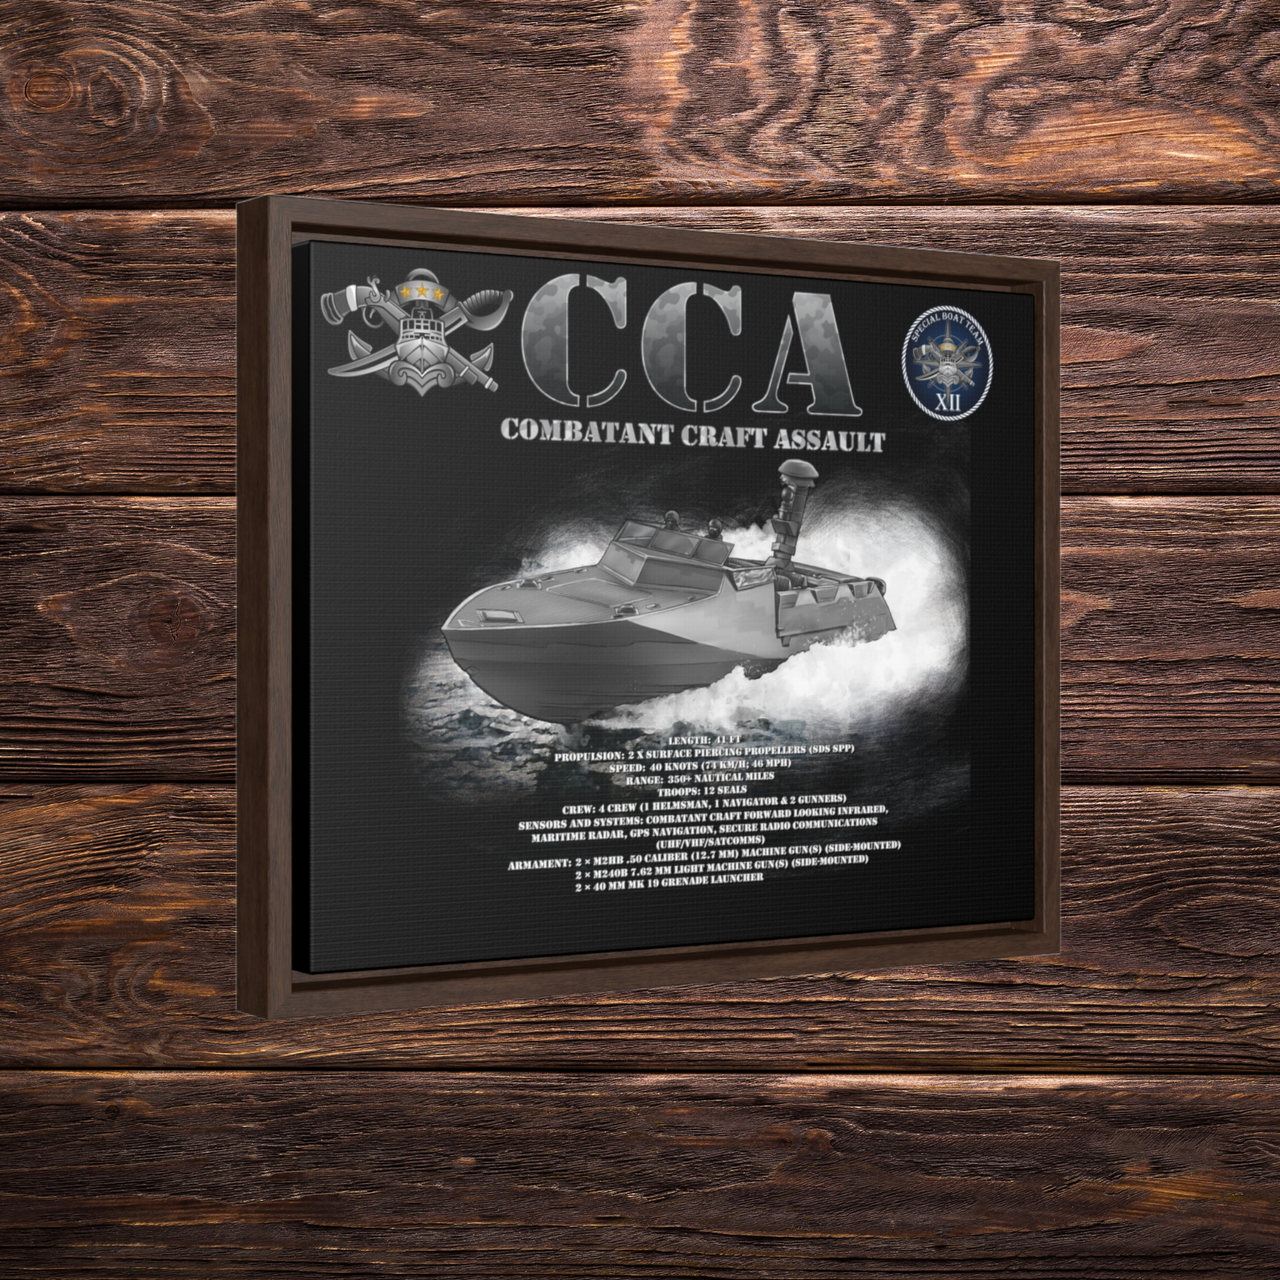 Combatant Craft Assault - CCA, Special Boat Team 12 - SBT 12